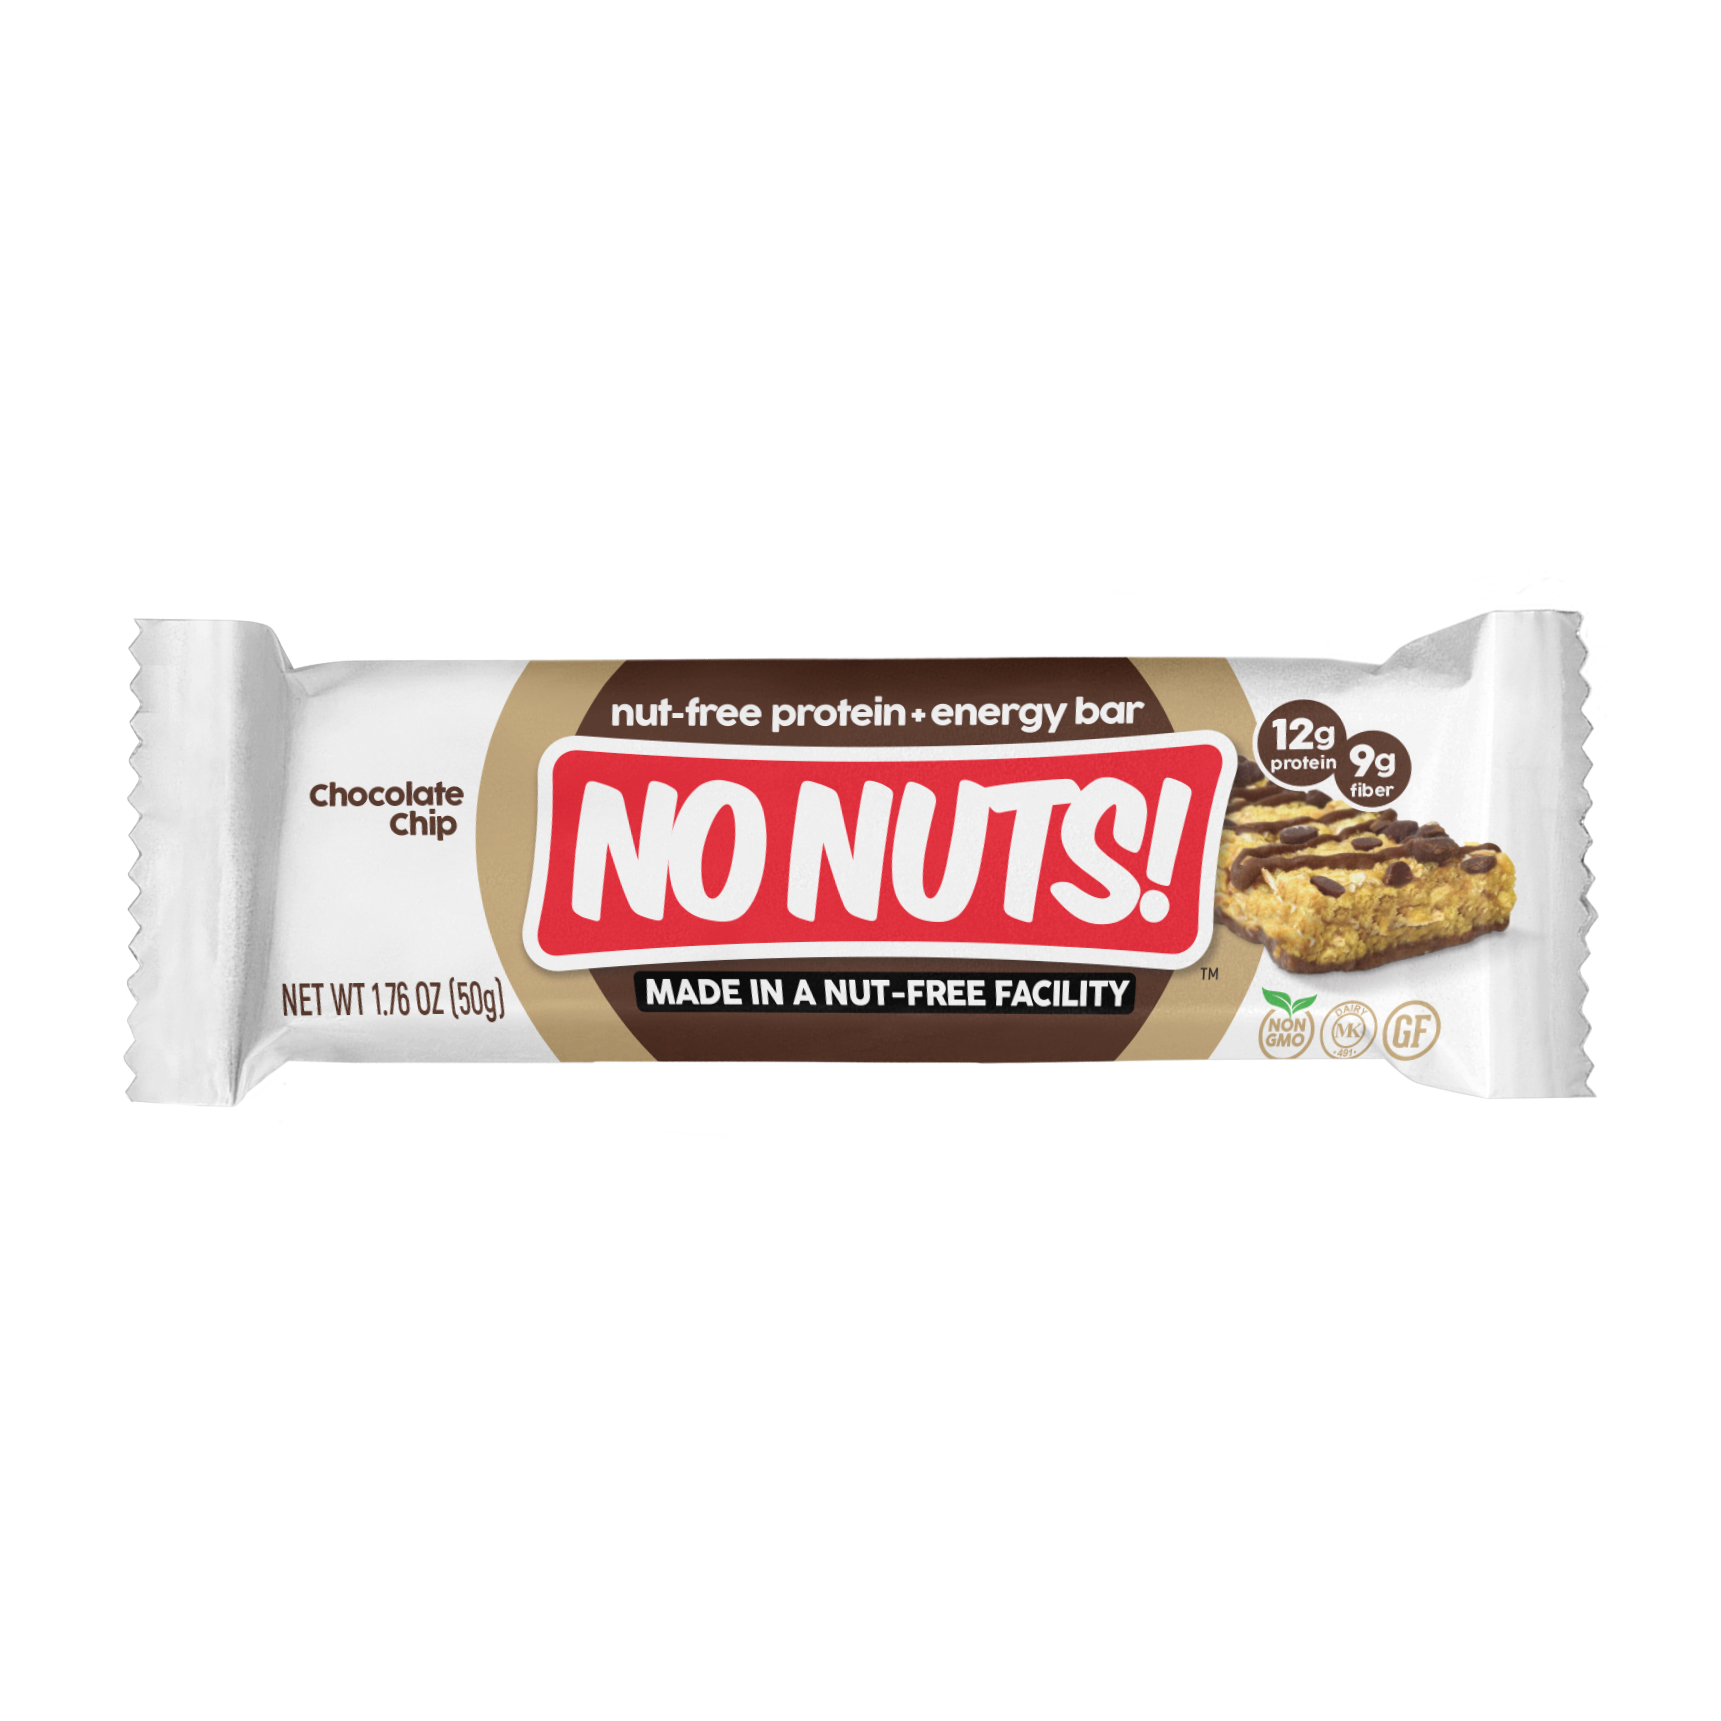 Download Media Kit | No Nuts!